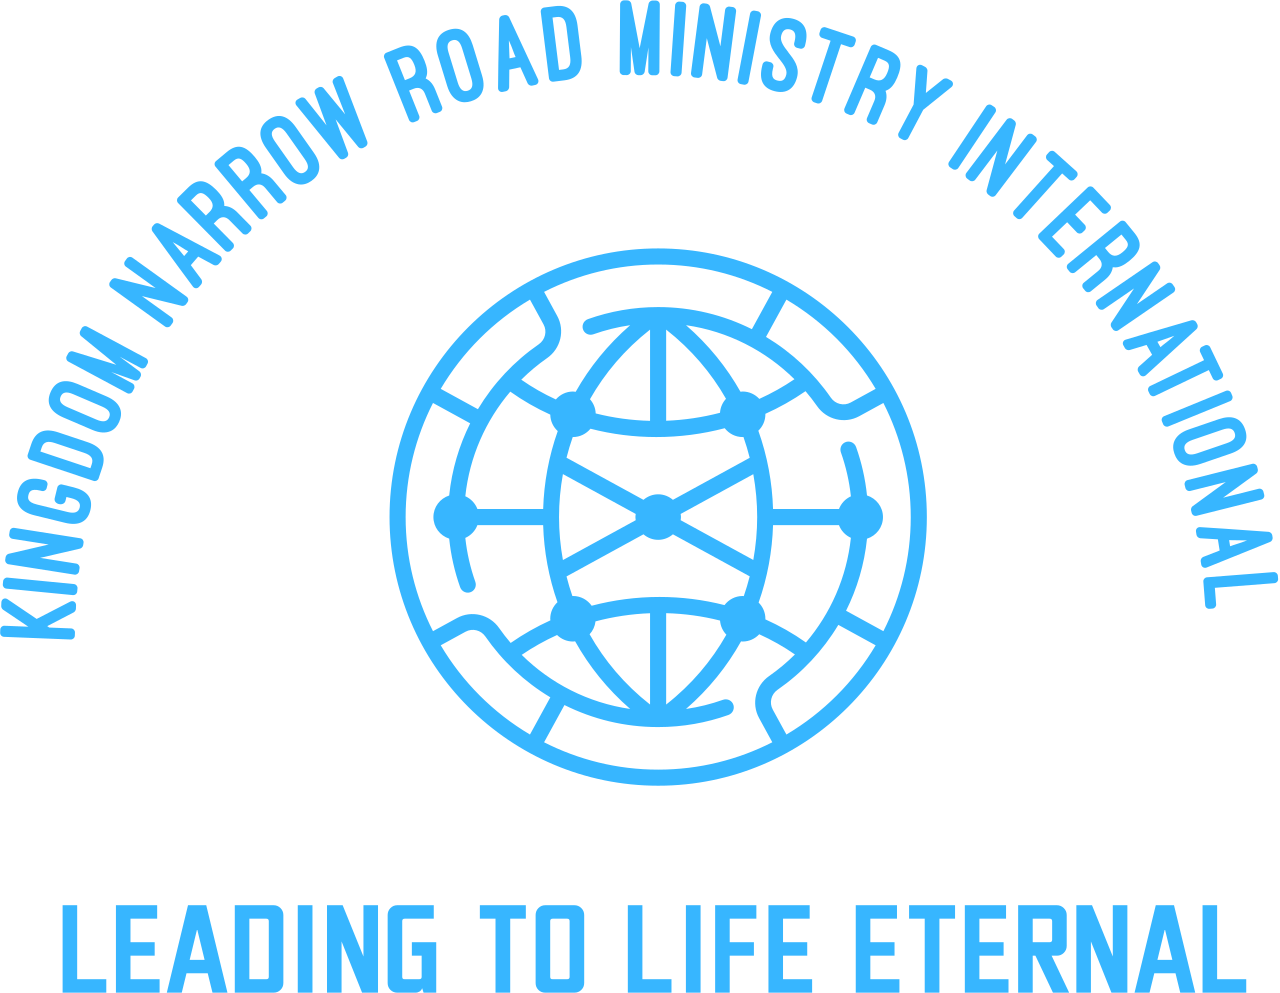 KINGDOM NARROW ROAD MINISTRY INTERNATIONAL 's logo